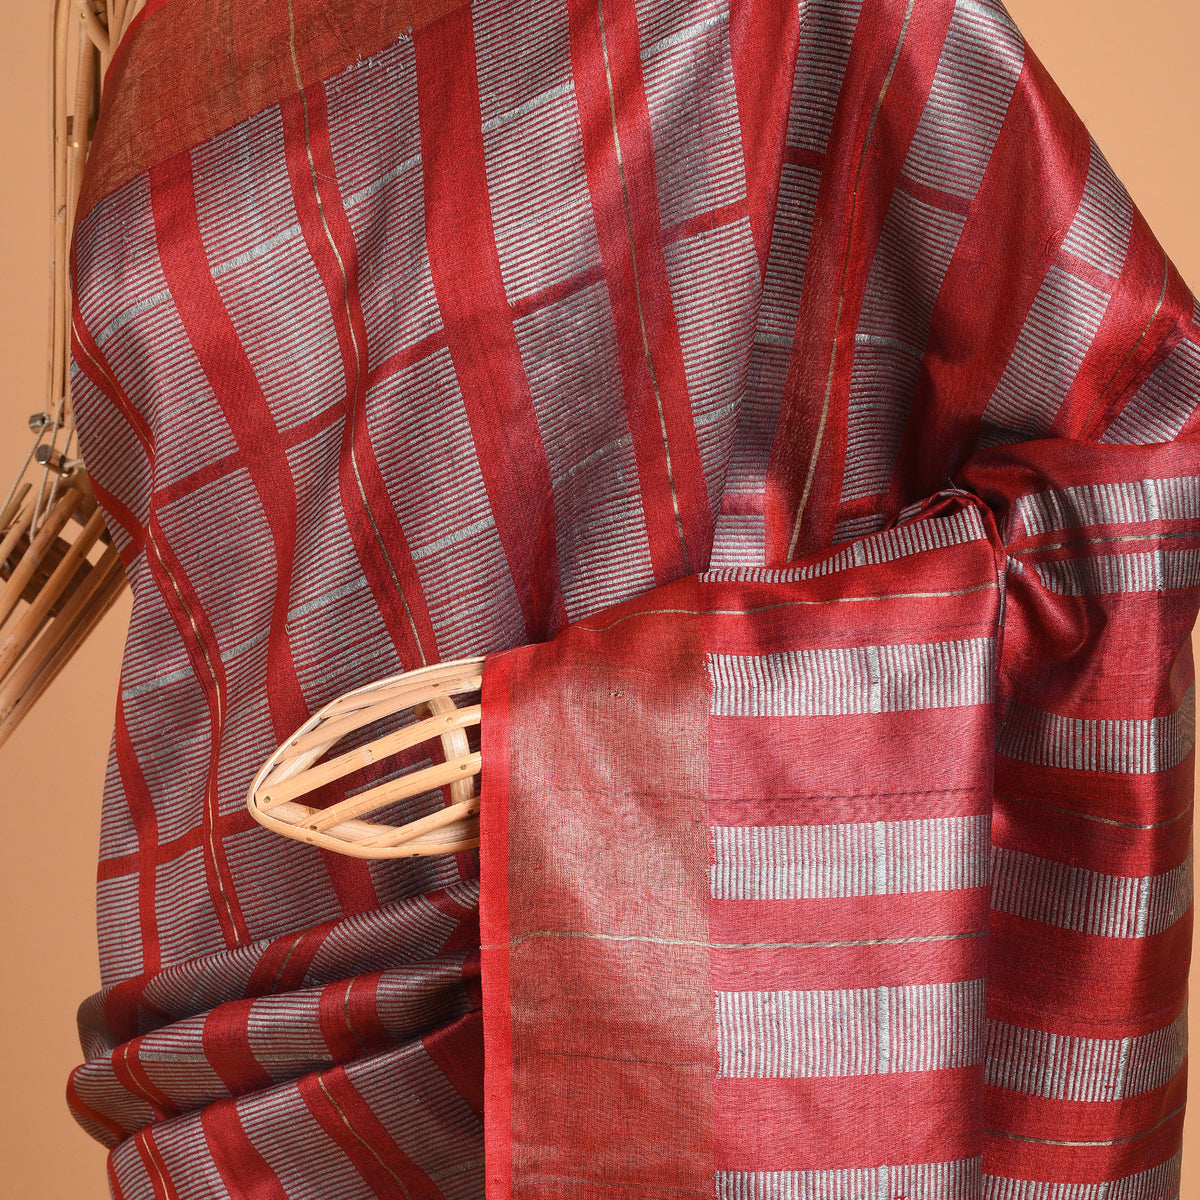 KADAM Handwoven Tussar Silk Sari - Chilli Red